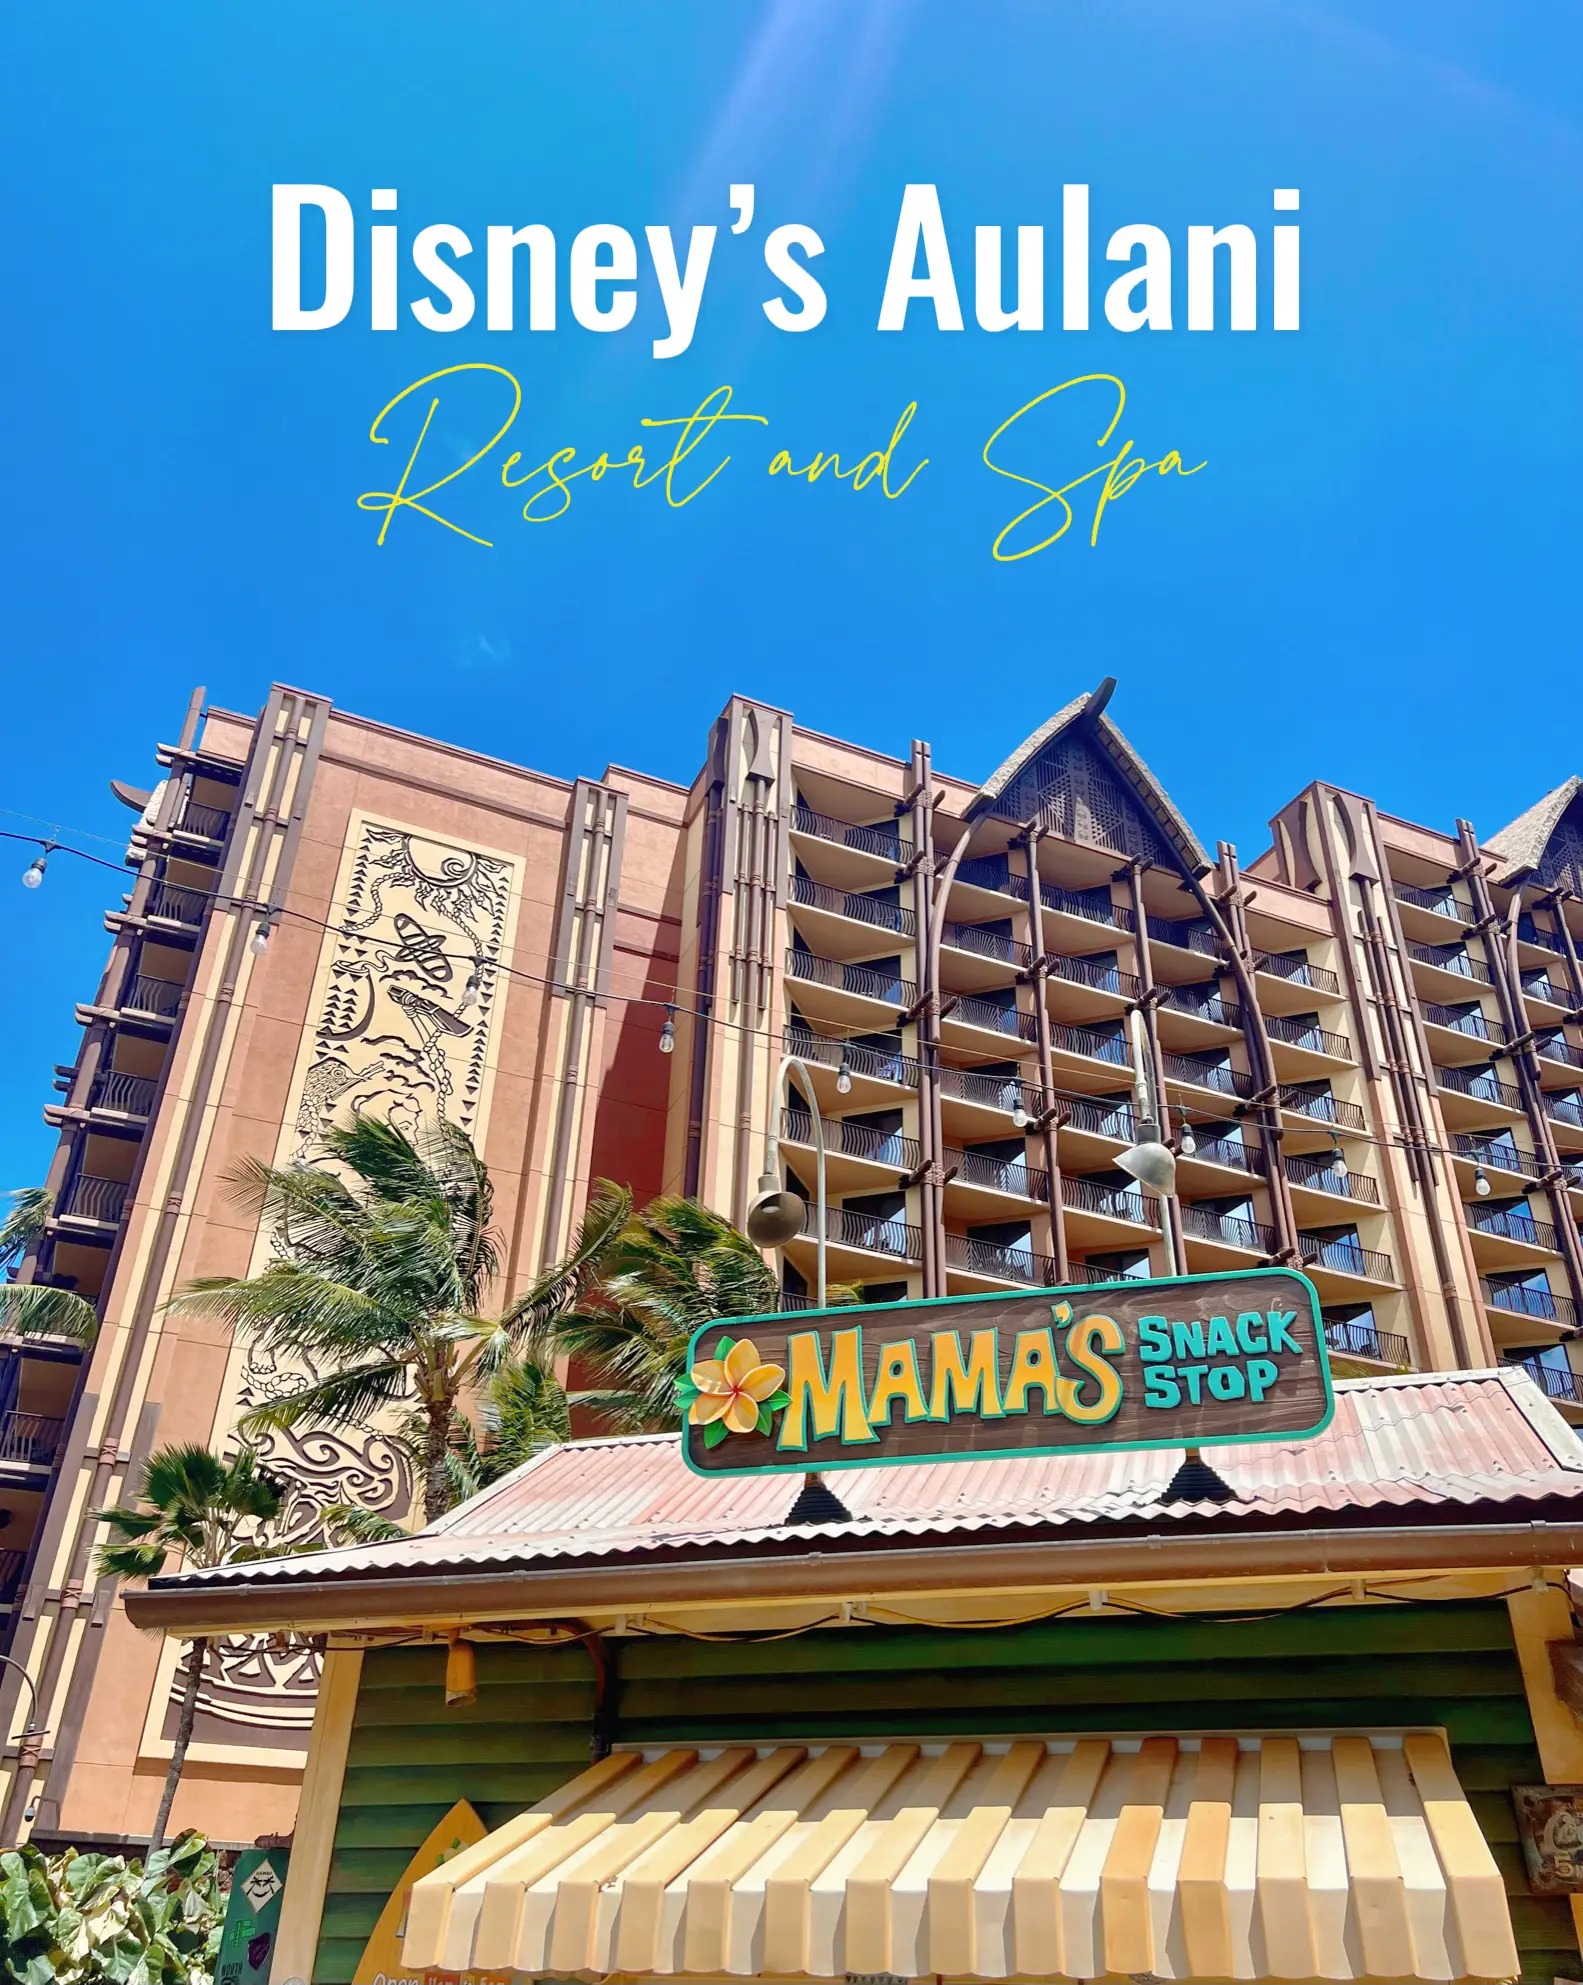 Disney’s Aulani Resort & Spa, island of Oahu ☀️'s images